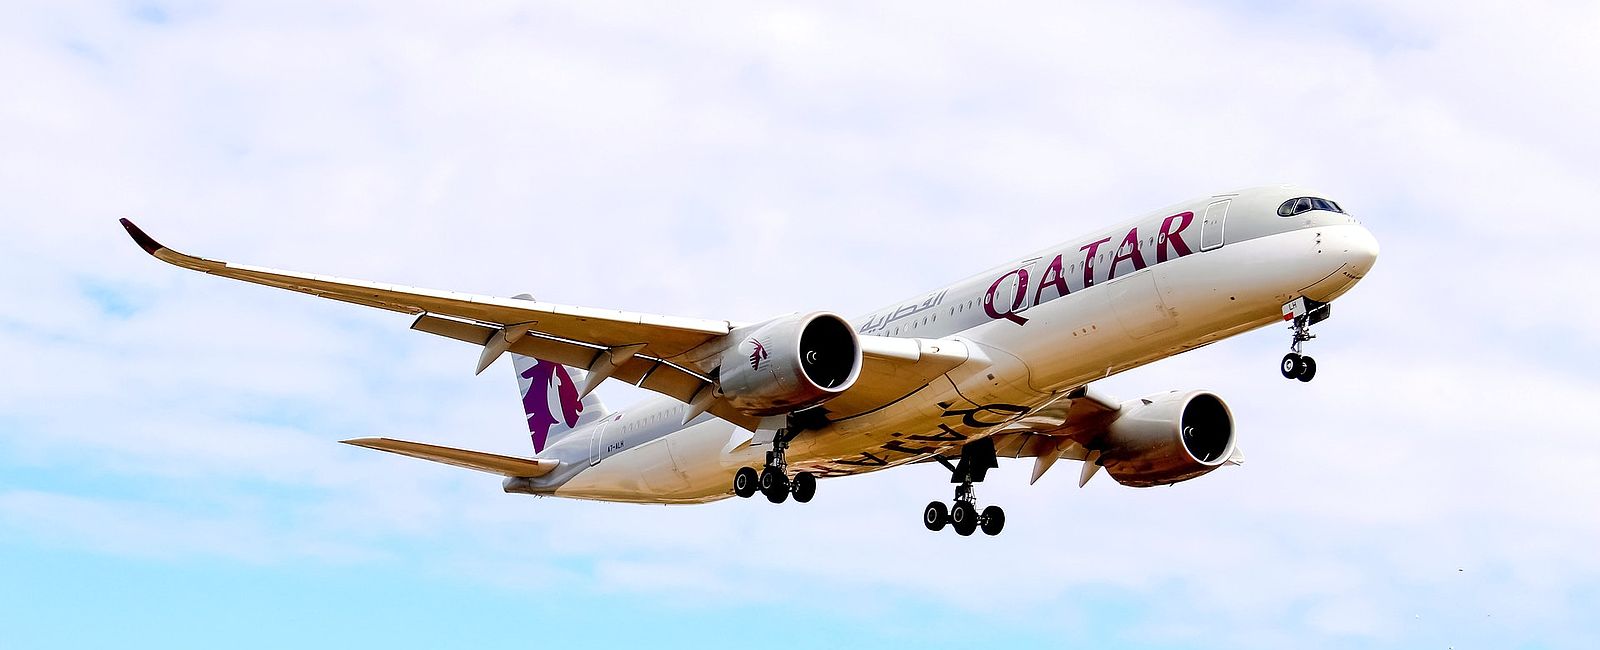 AIRLINE ANGEBOTE
 Qatar Business Class - Super Deals  
